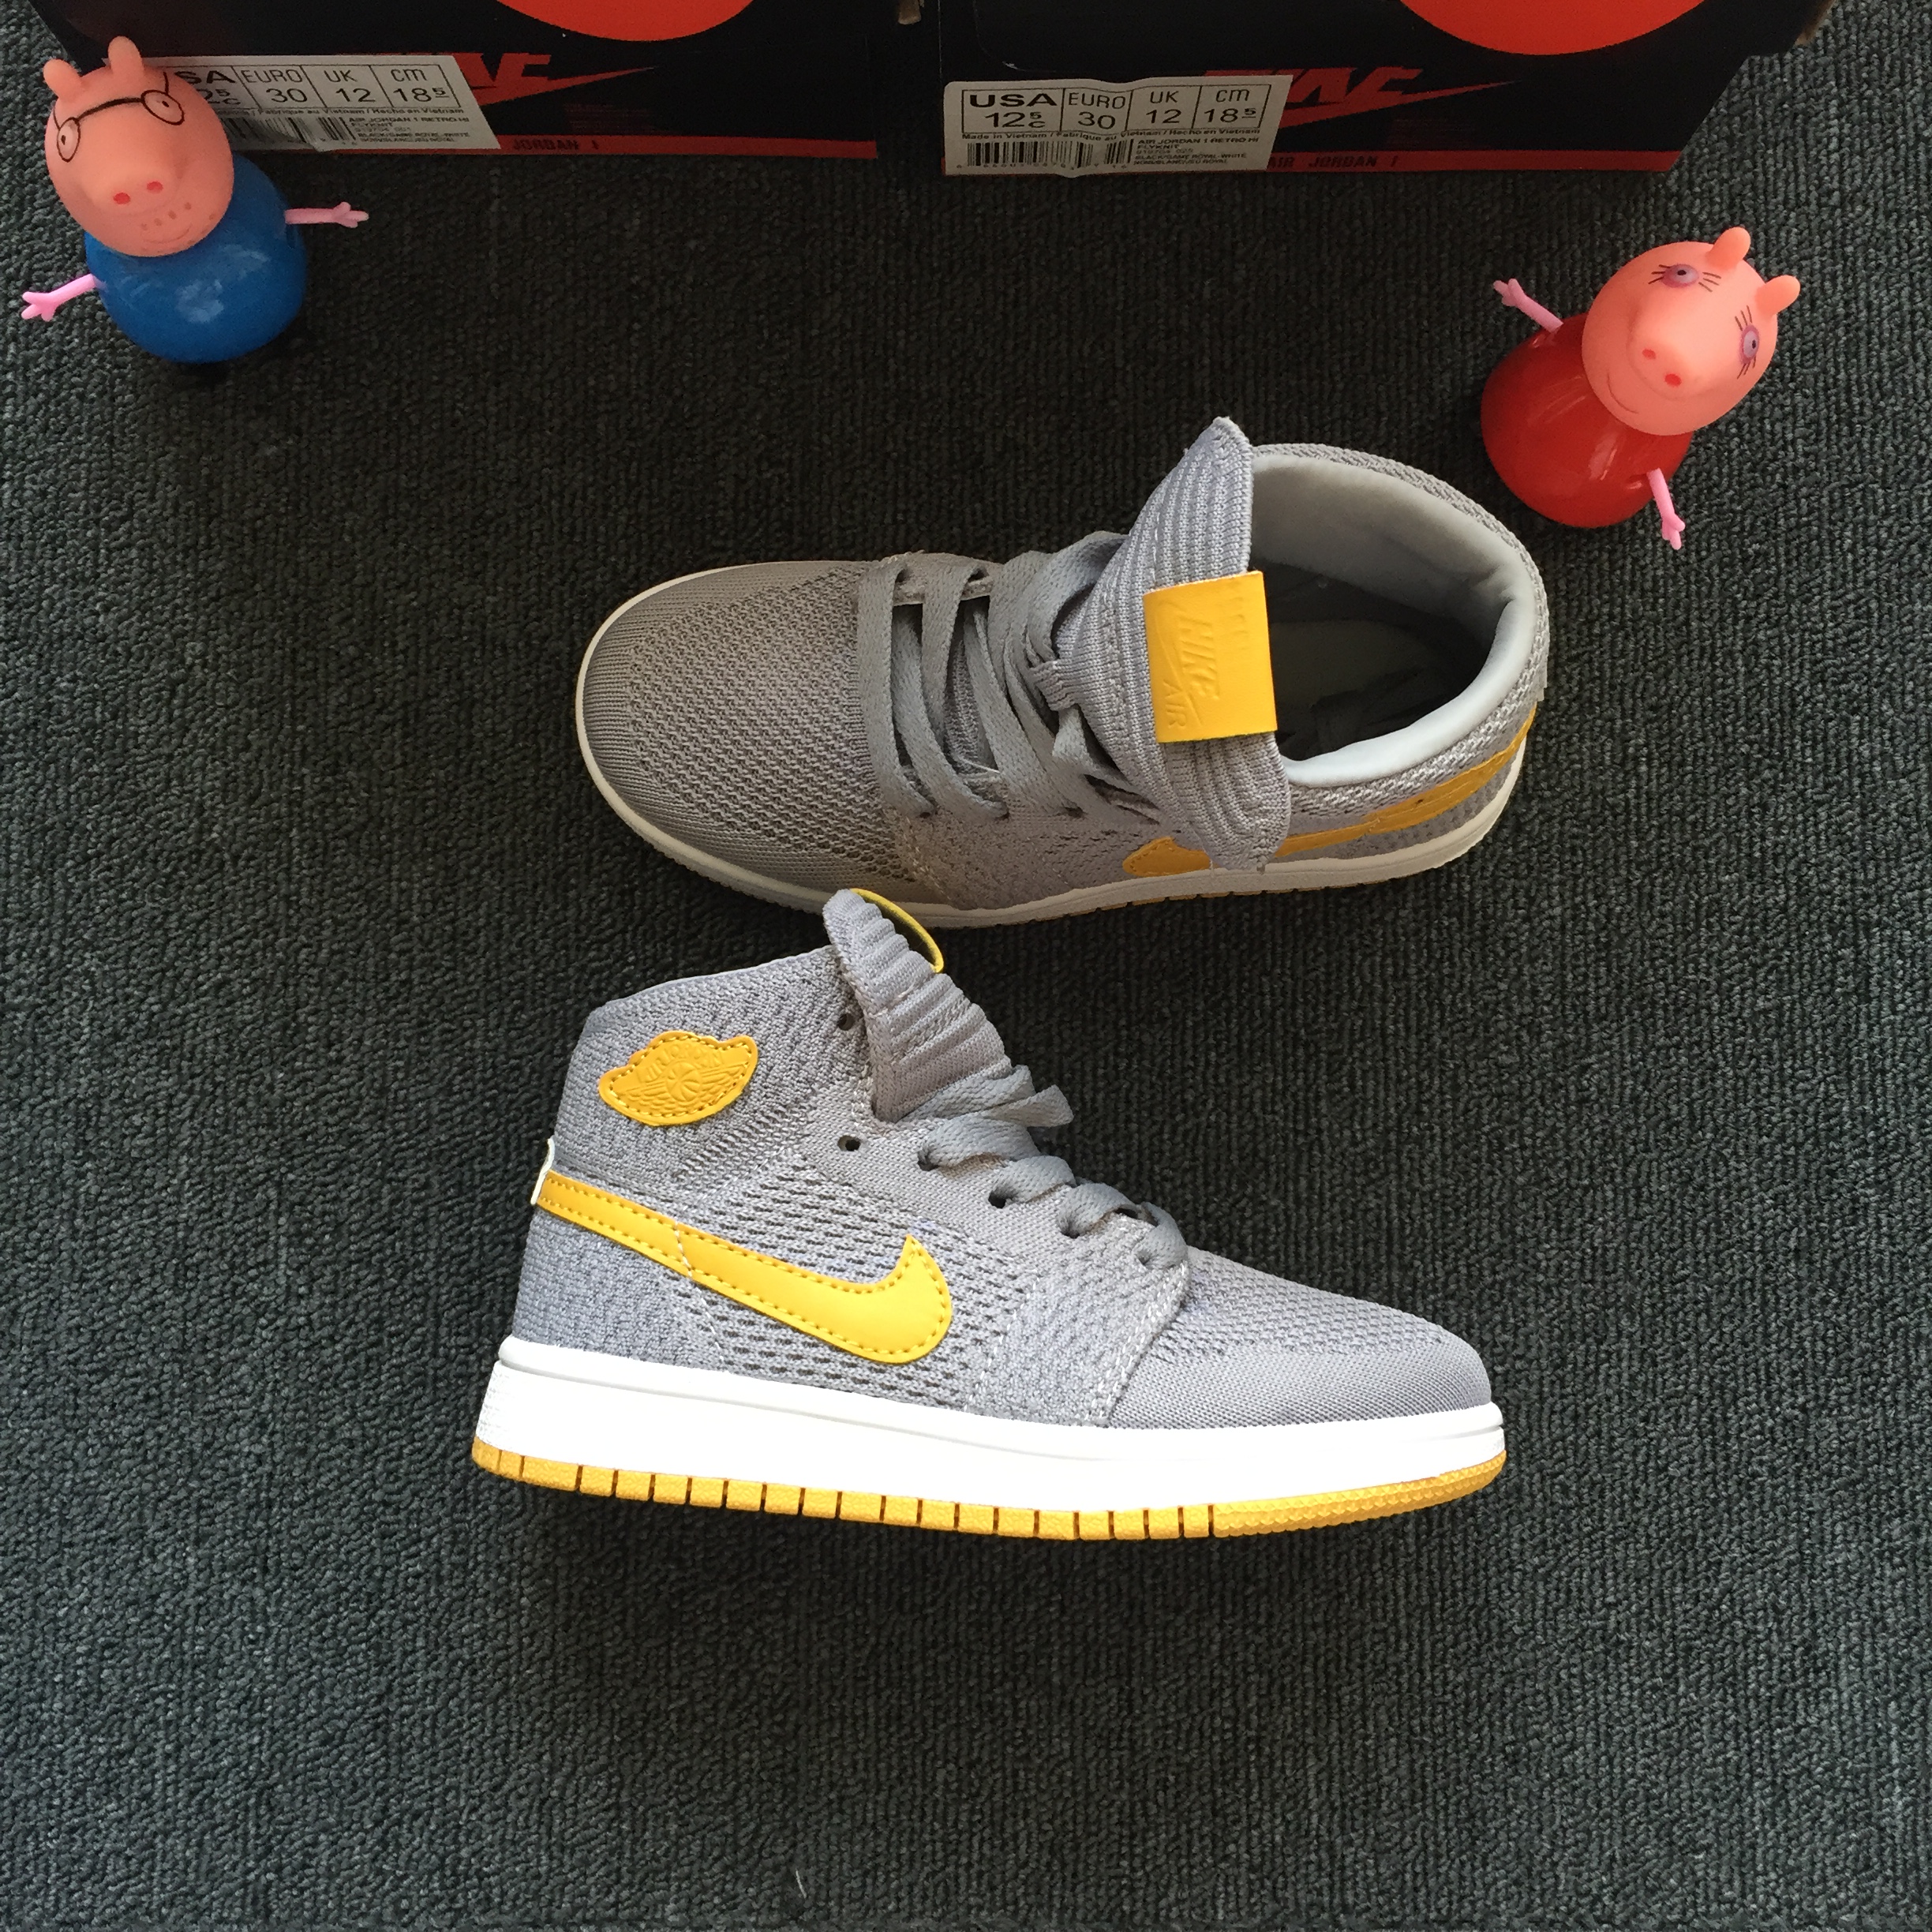 2018 Air Jordan 1 Knit Grey Yellow Shoes For Kids